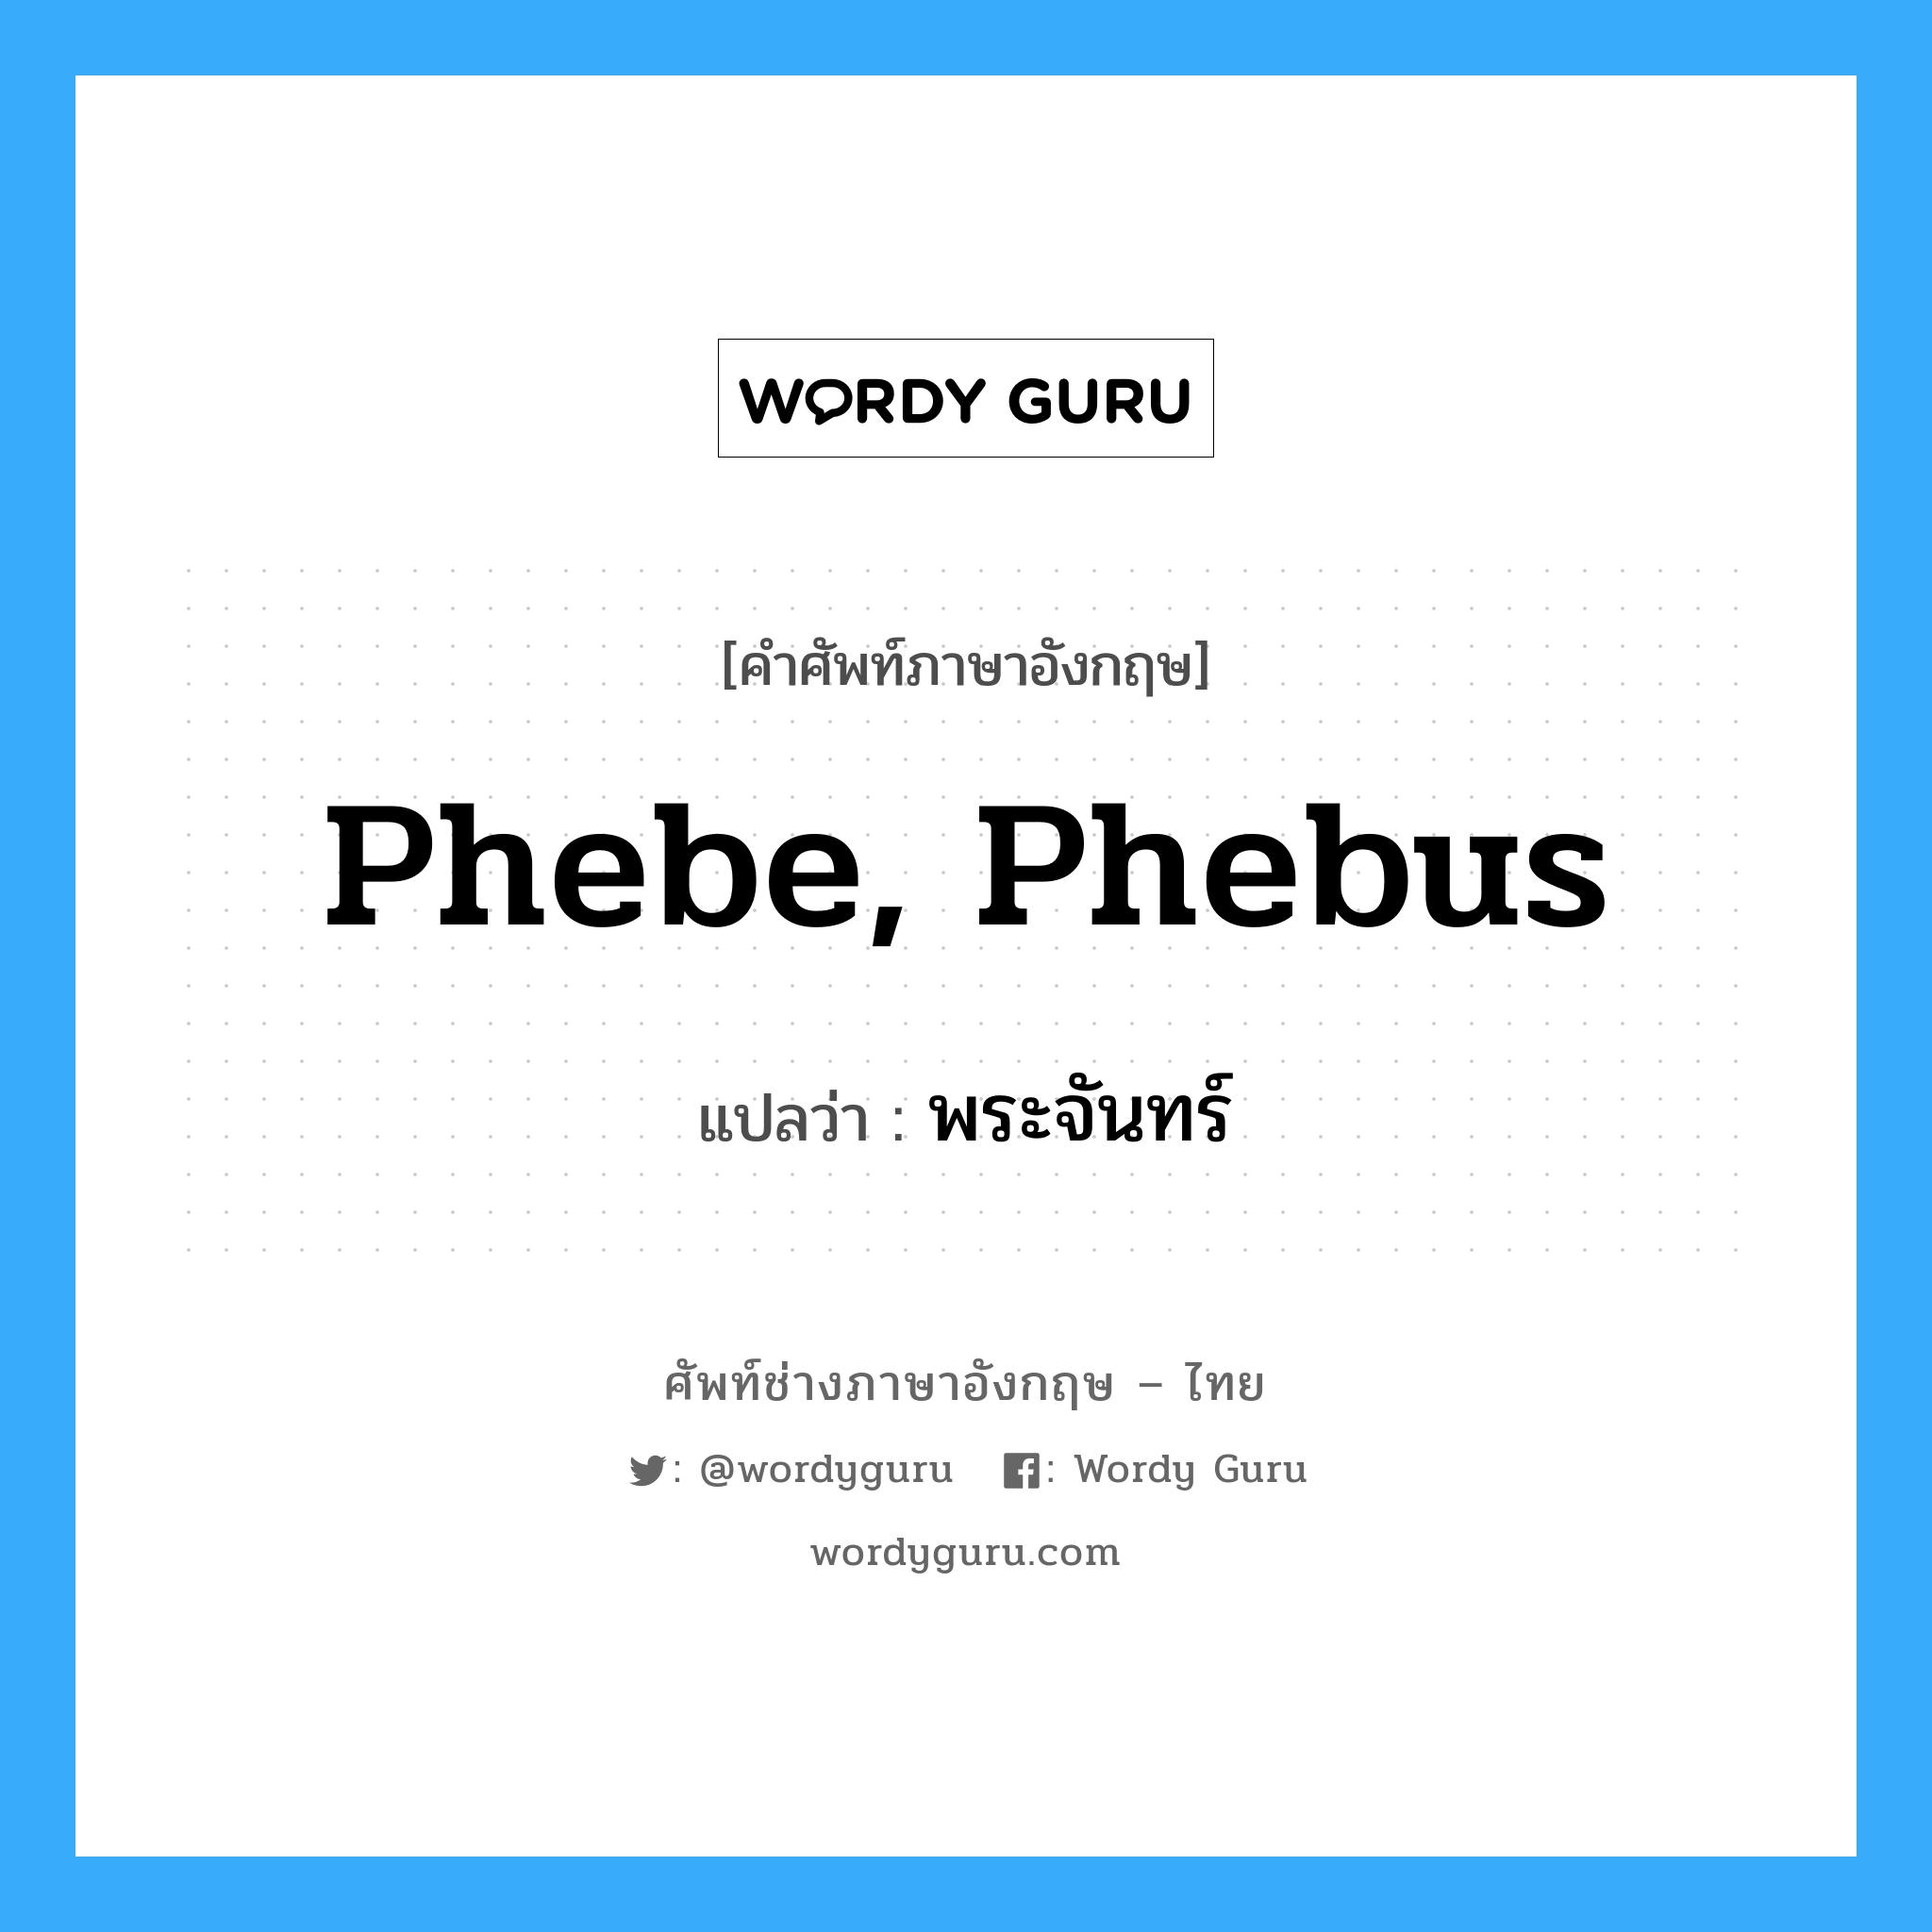 Phebe, Phebus แปลว่า?, คำศัพท์ช่างภาษาอังกฤษ - ไทย Phebe, Phebus คำศัพท์ภาษาอังกฤษ Phebe, Phebus แปลว่า พระจันทร์